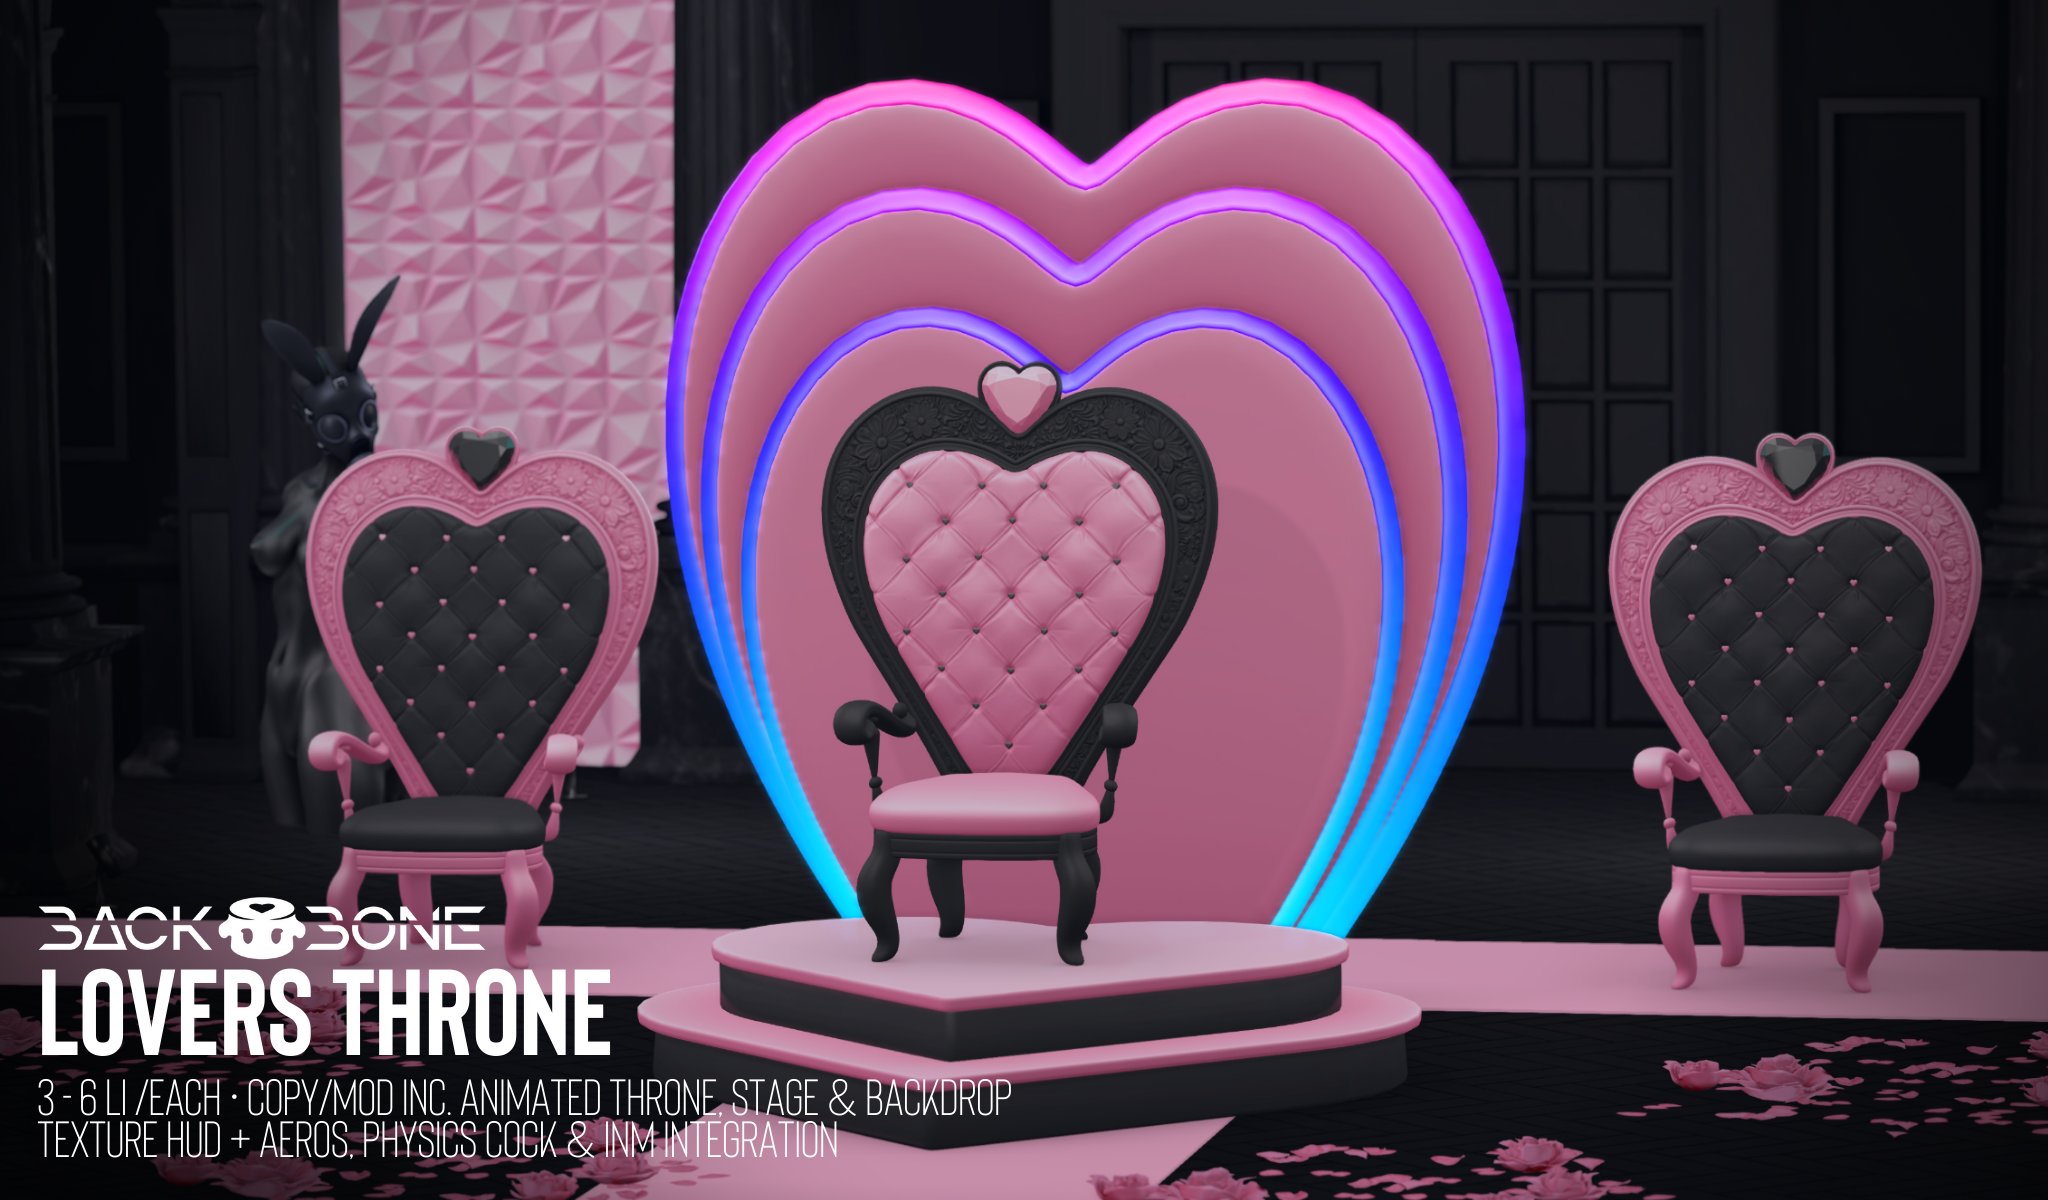 BackBone – Lover’s Throne